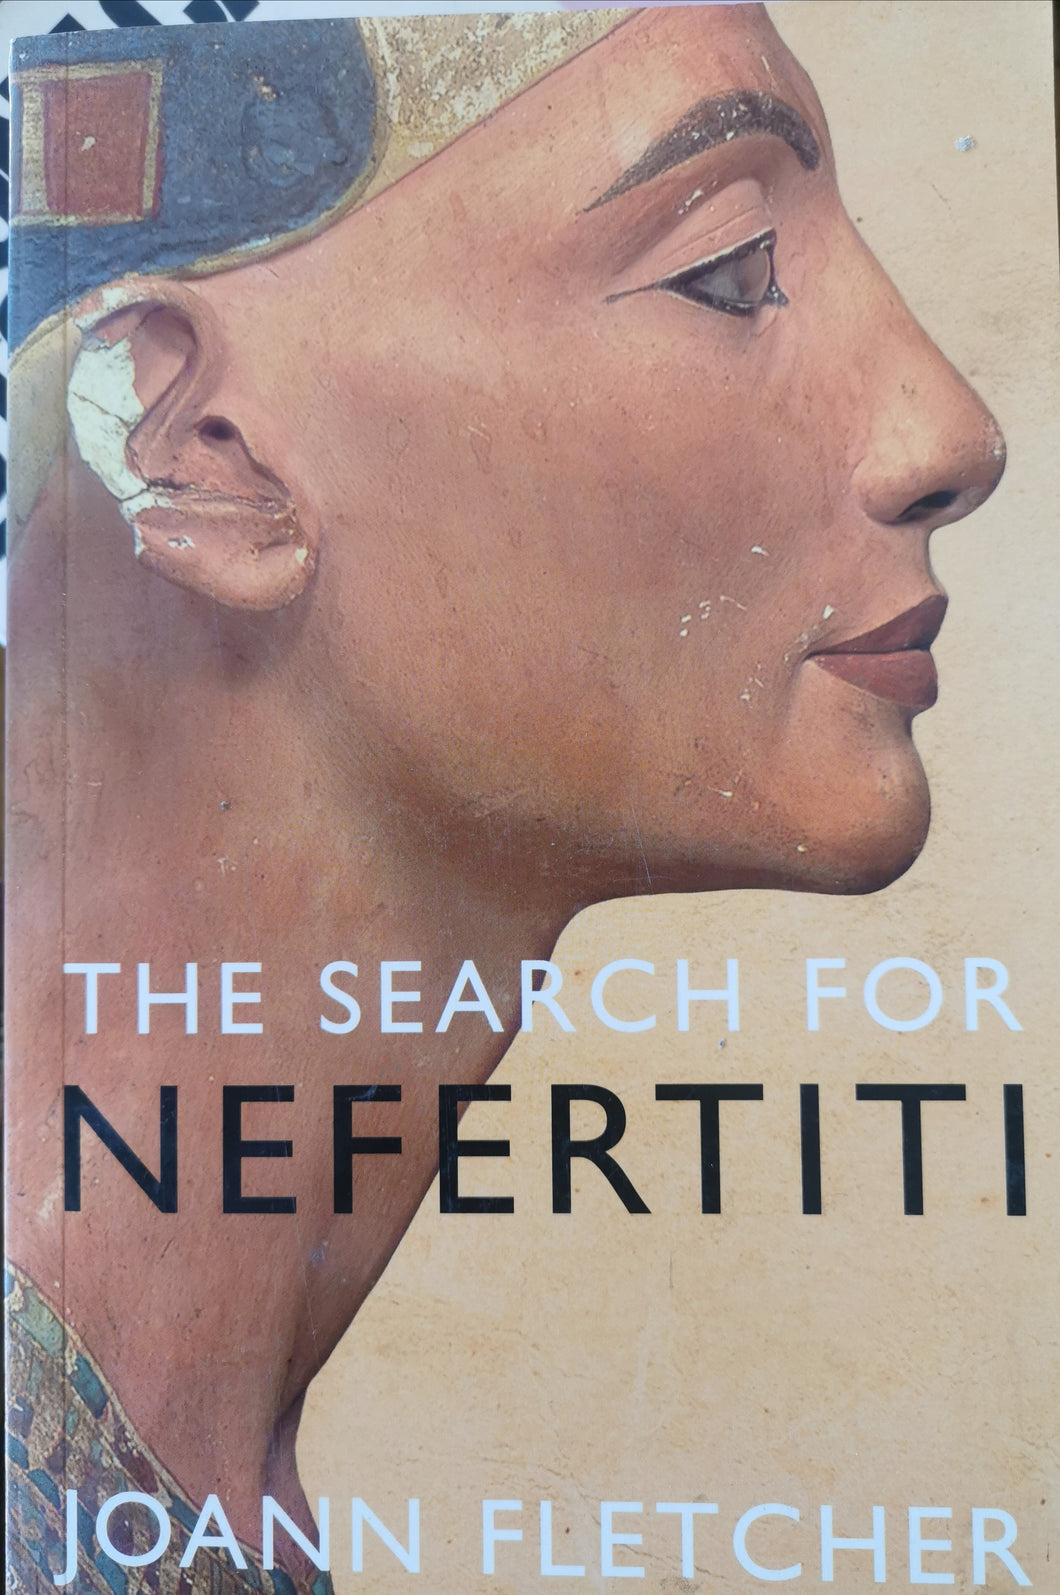 The Search for Nefertiti - Joann Fletcher